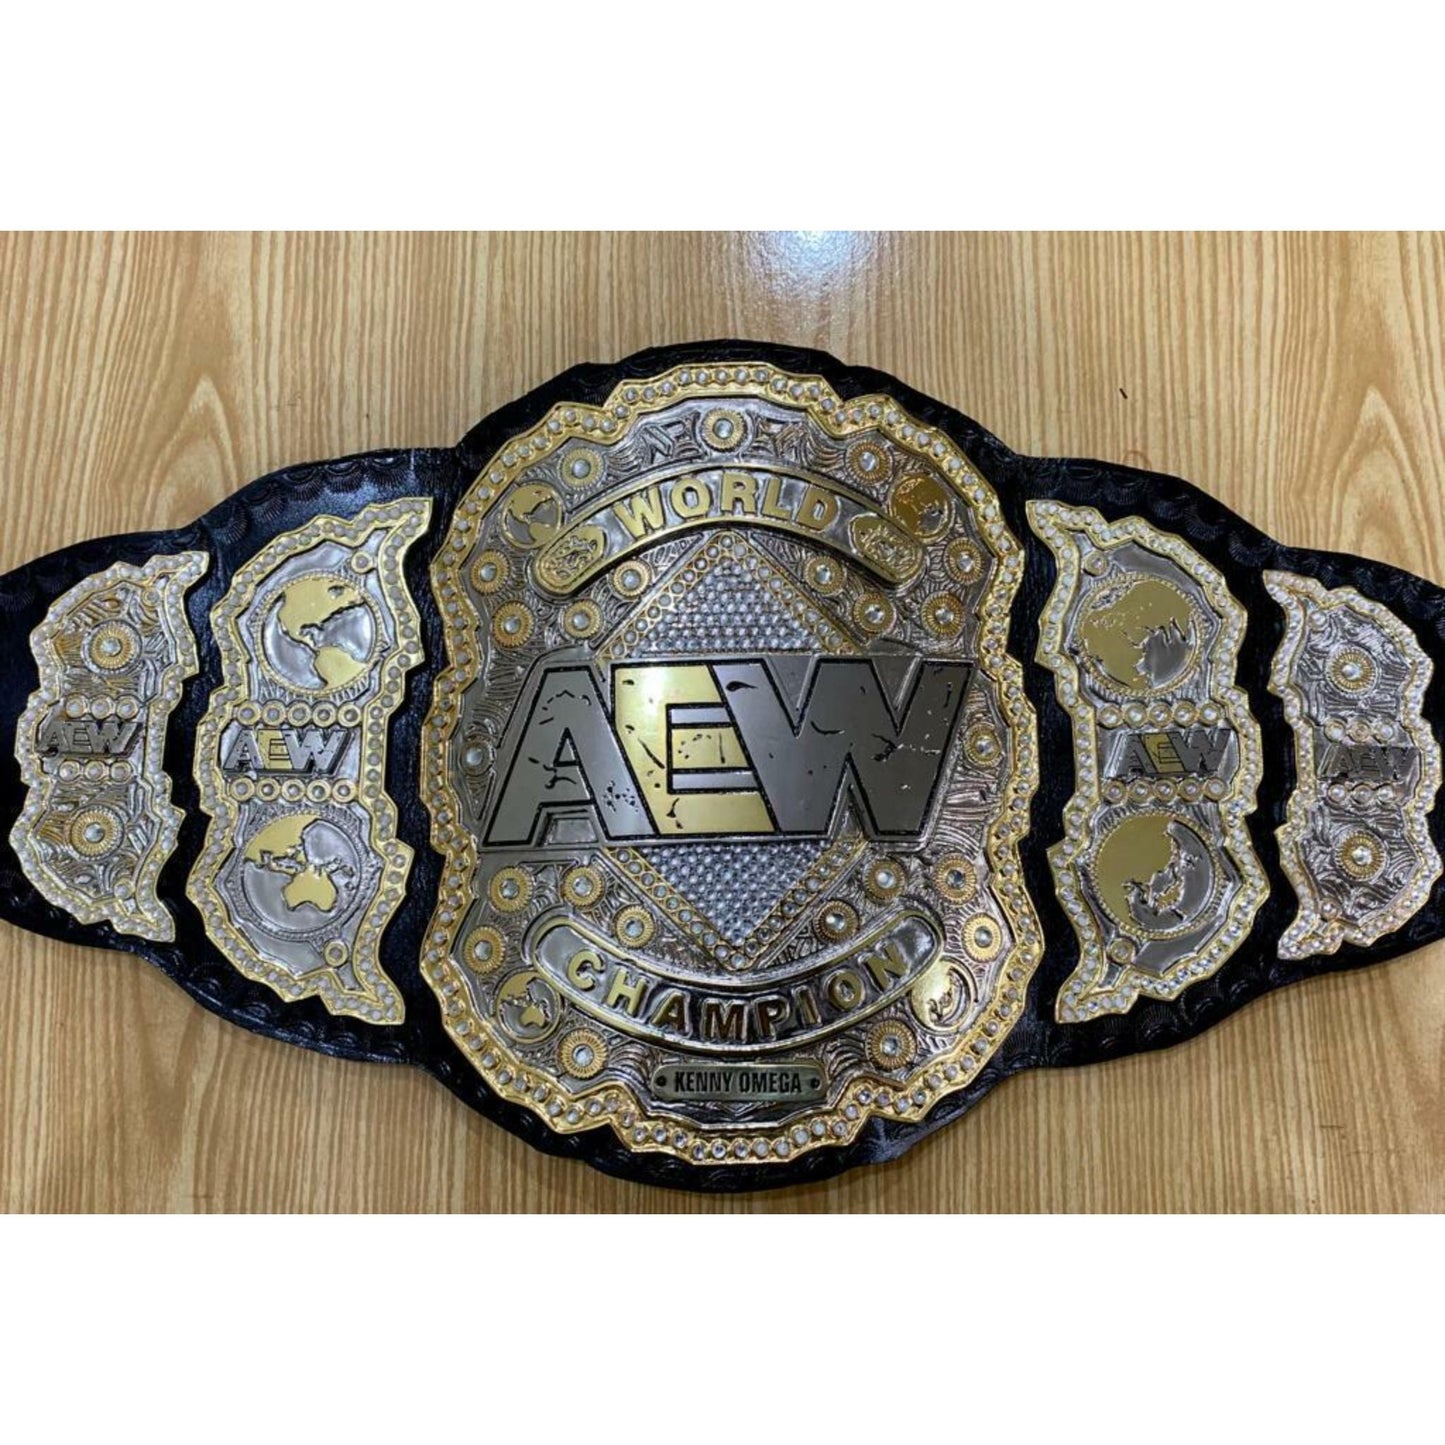 AEW Championship Replica Belt